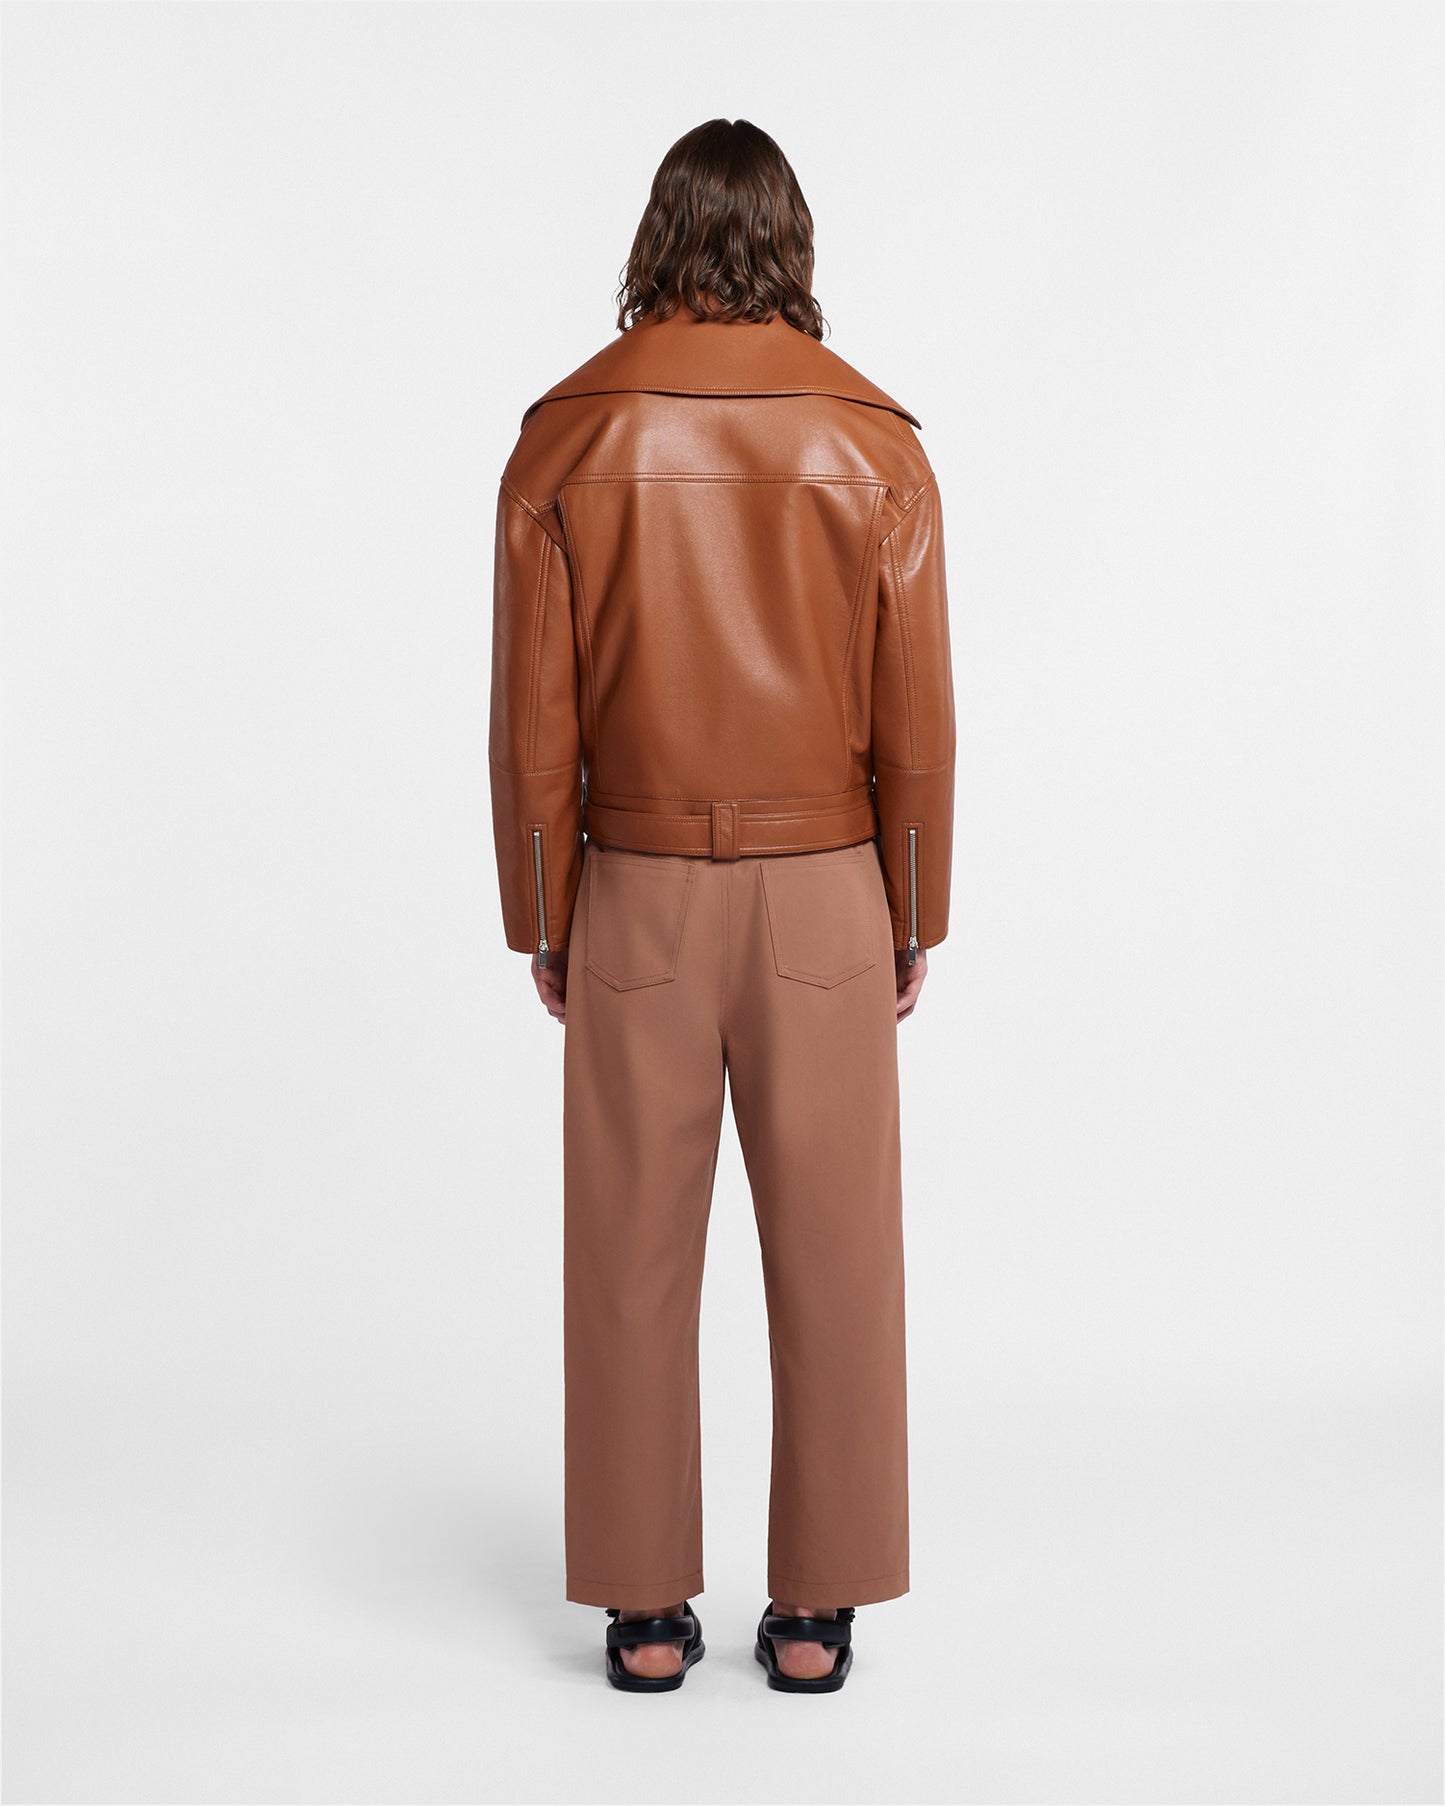 Berti - Regenerated Leather Jacket - Tan